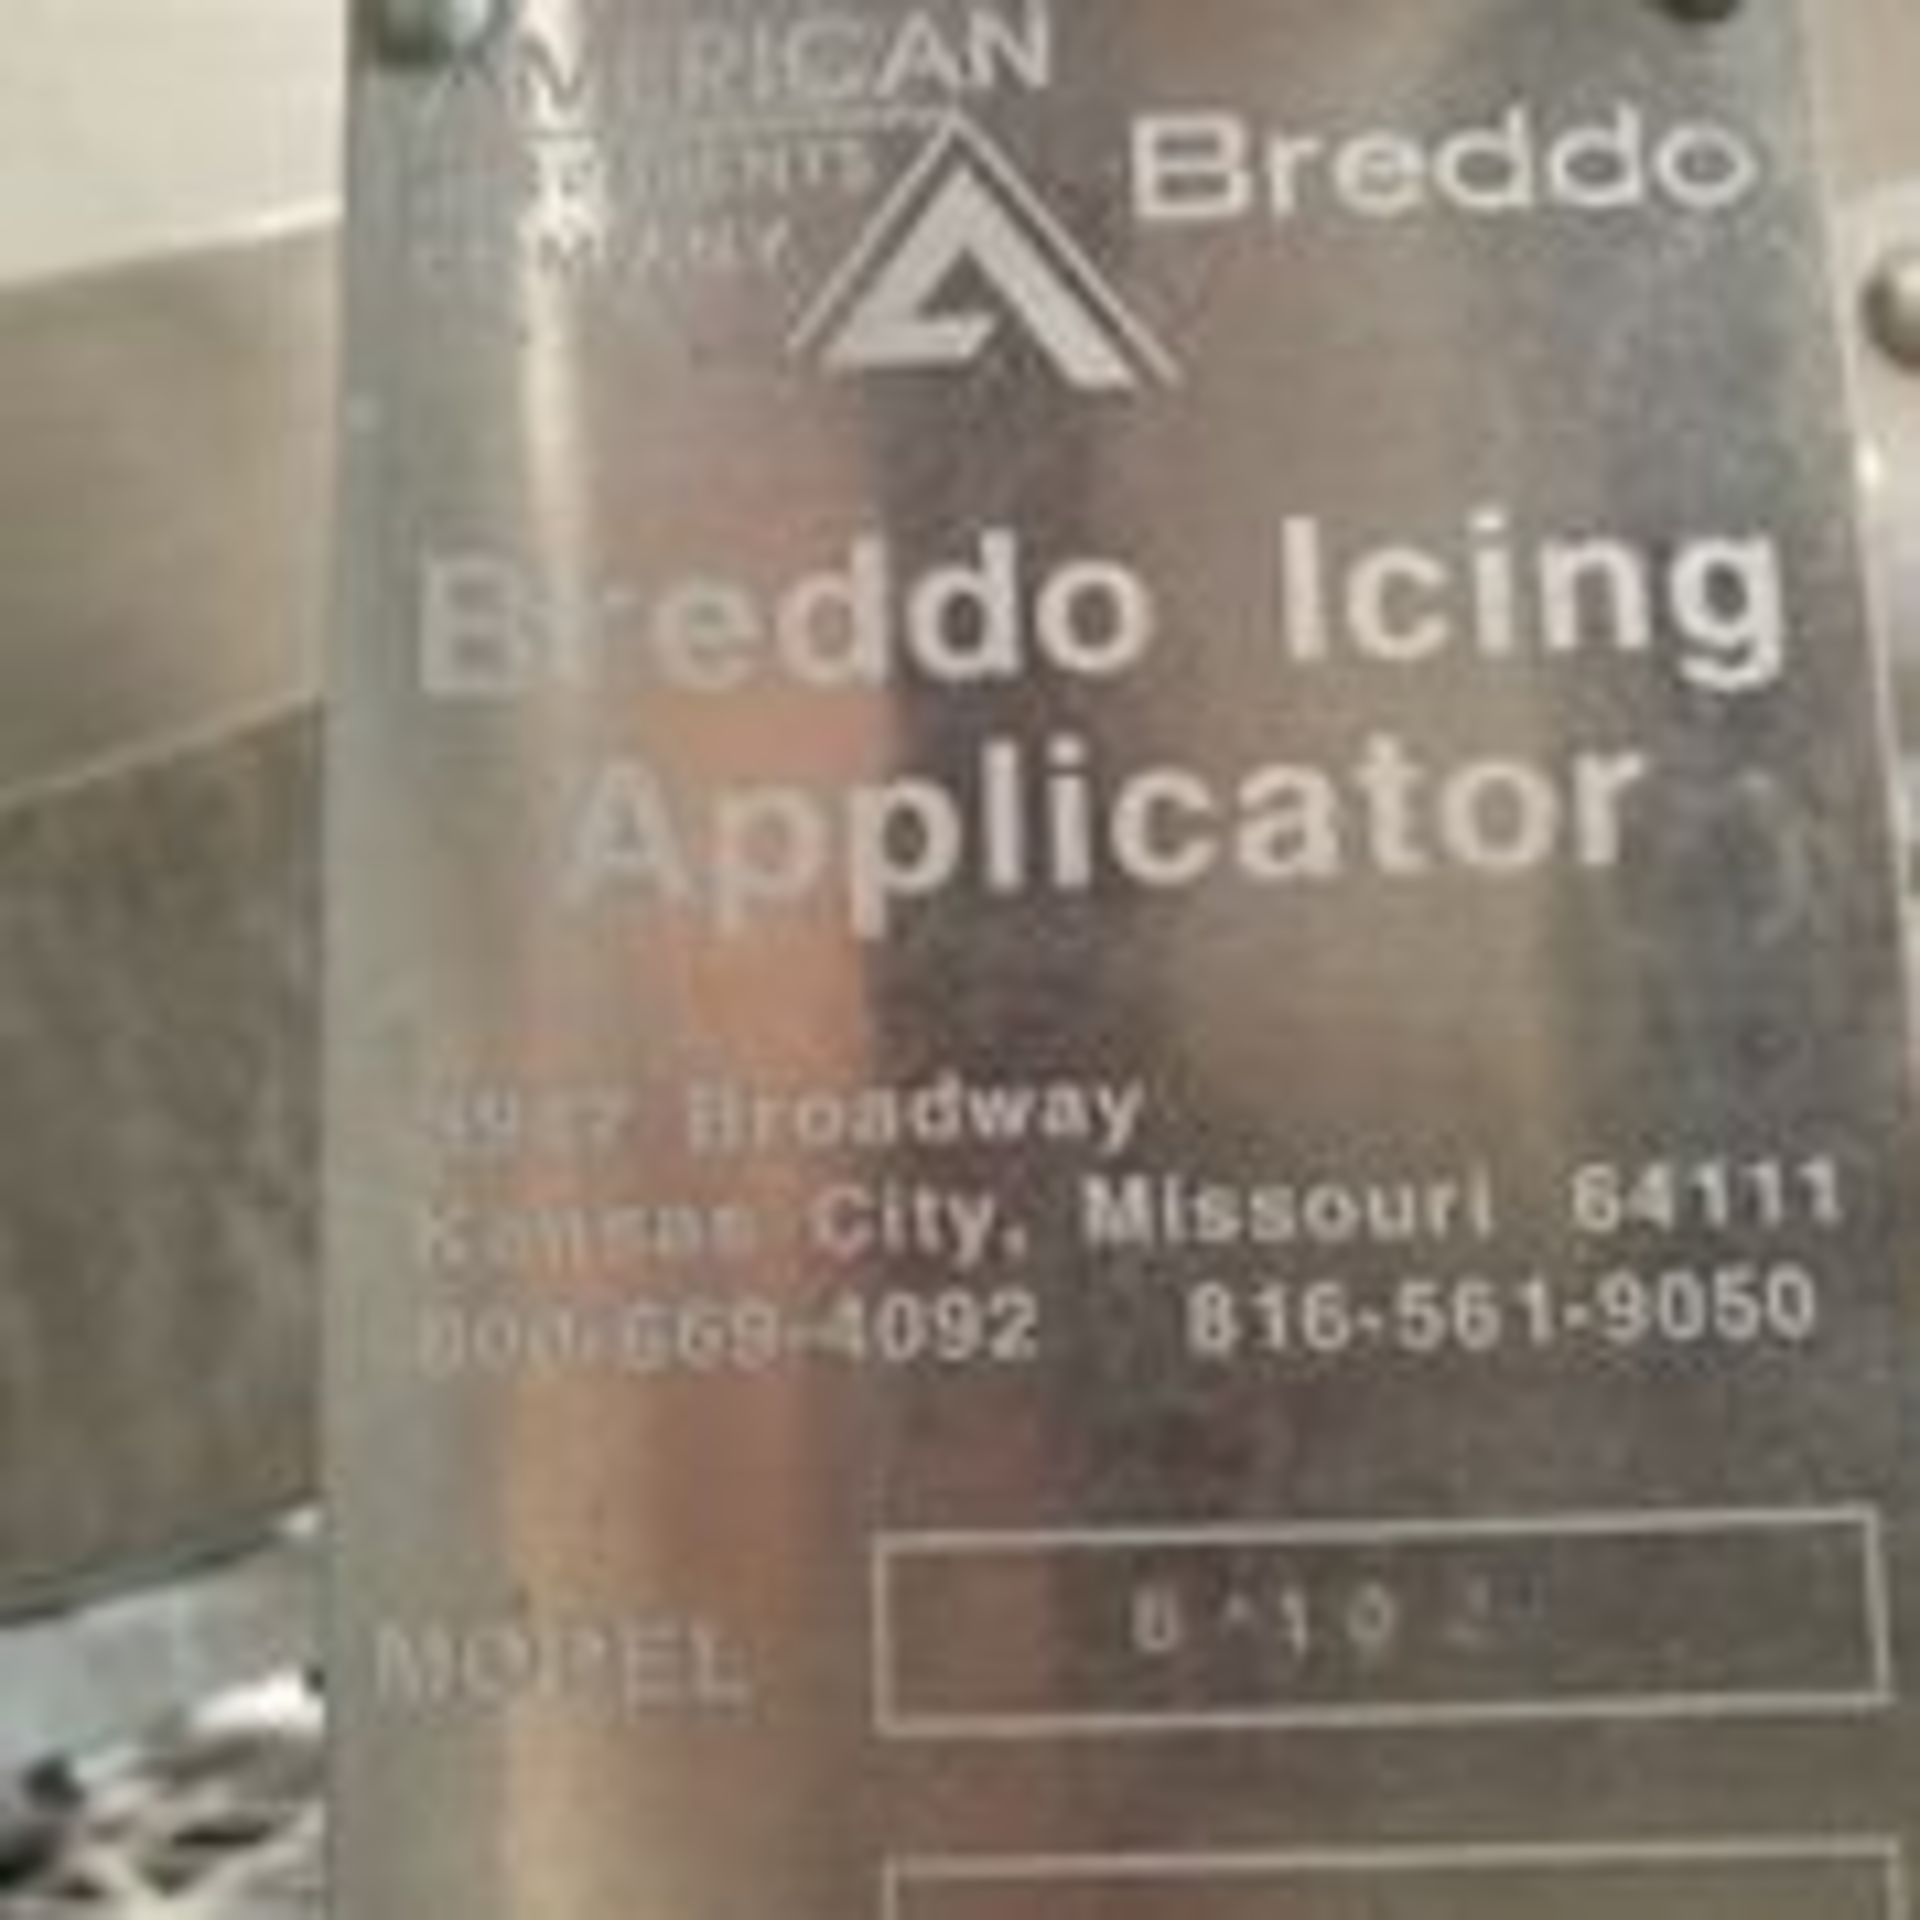 Breddo Icer, Model: B-102, Serial: 1.9919.2.99252, Size: 24" Applicator 6.5? Roller with AC Motor - Image 7 of 7